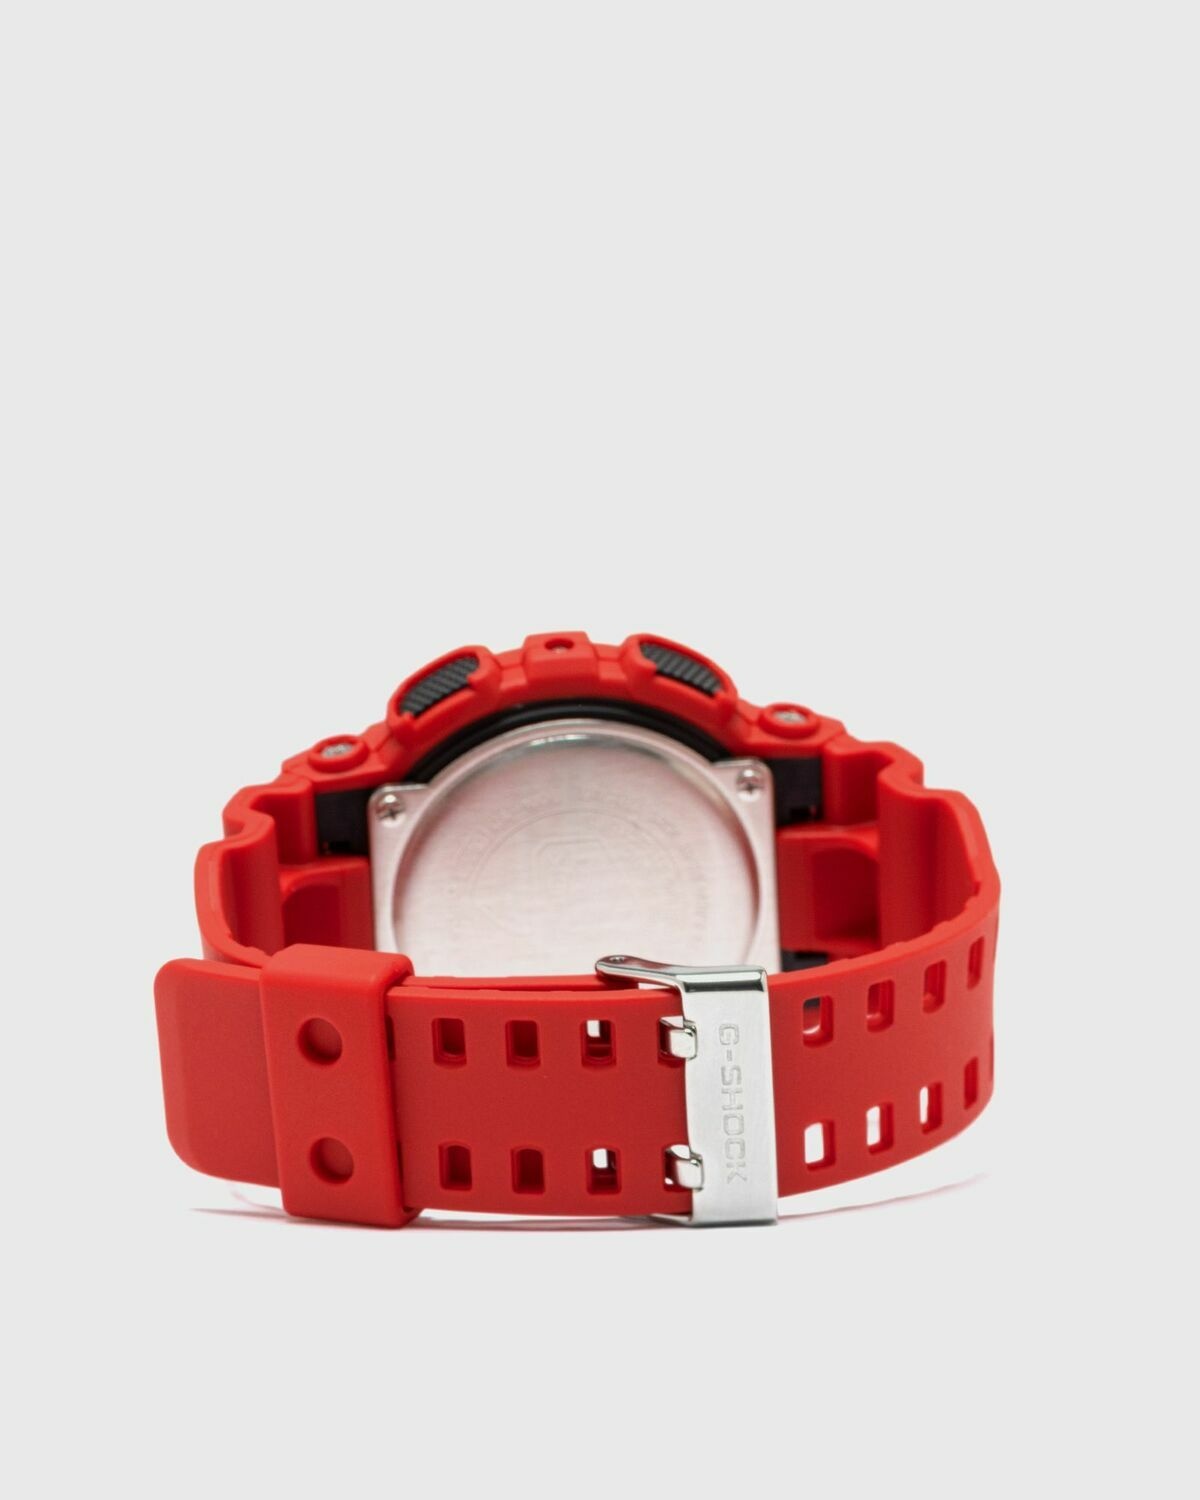 Ga Shock Aer Casio Mens - 100 G Watches B 4 - Casio Red